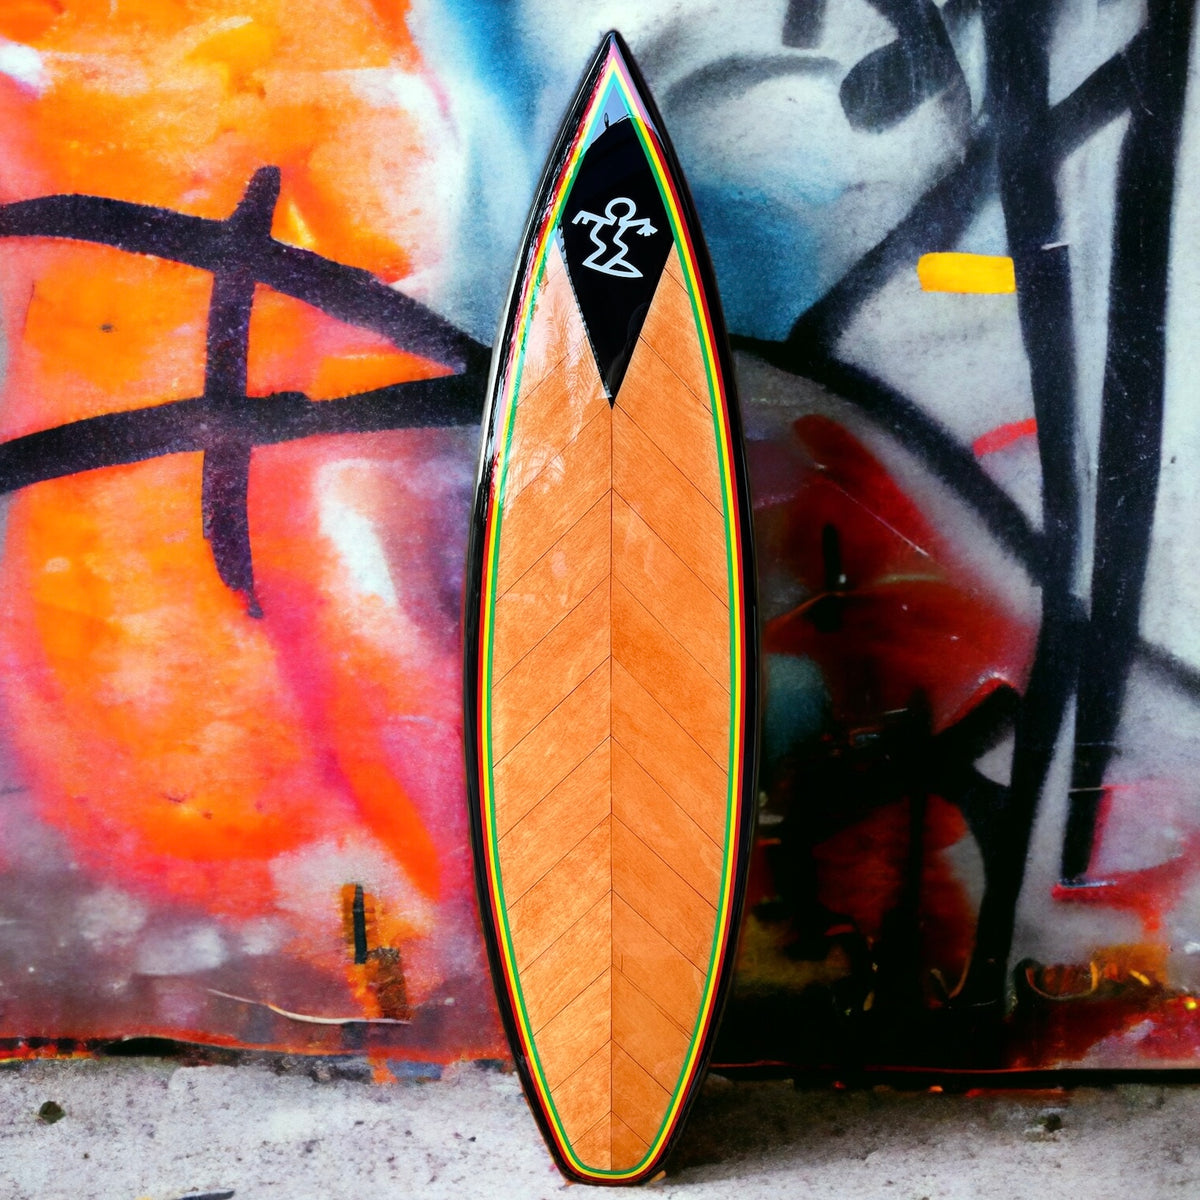 Wooden Decorative Surfboard Art for Wall Decor.  Surf board decor for a surf decor. Surfboard Decor for Wall decoration. Decorative Wall Surfboard Art